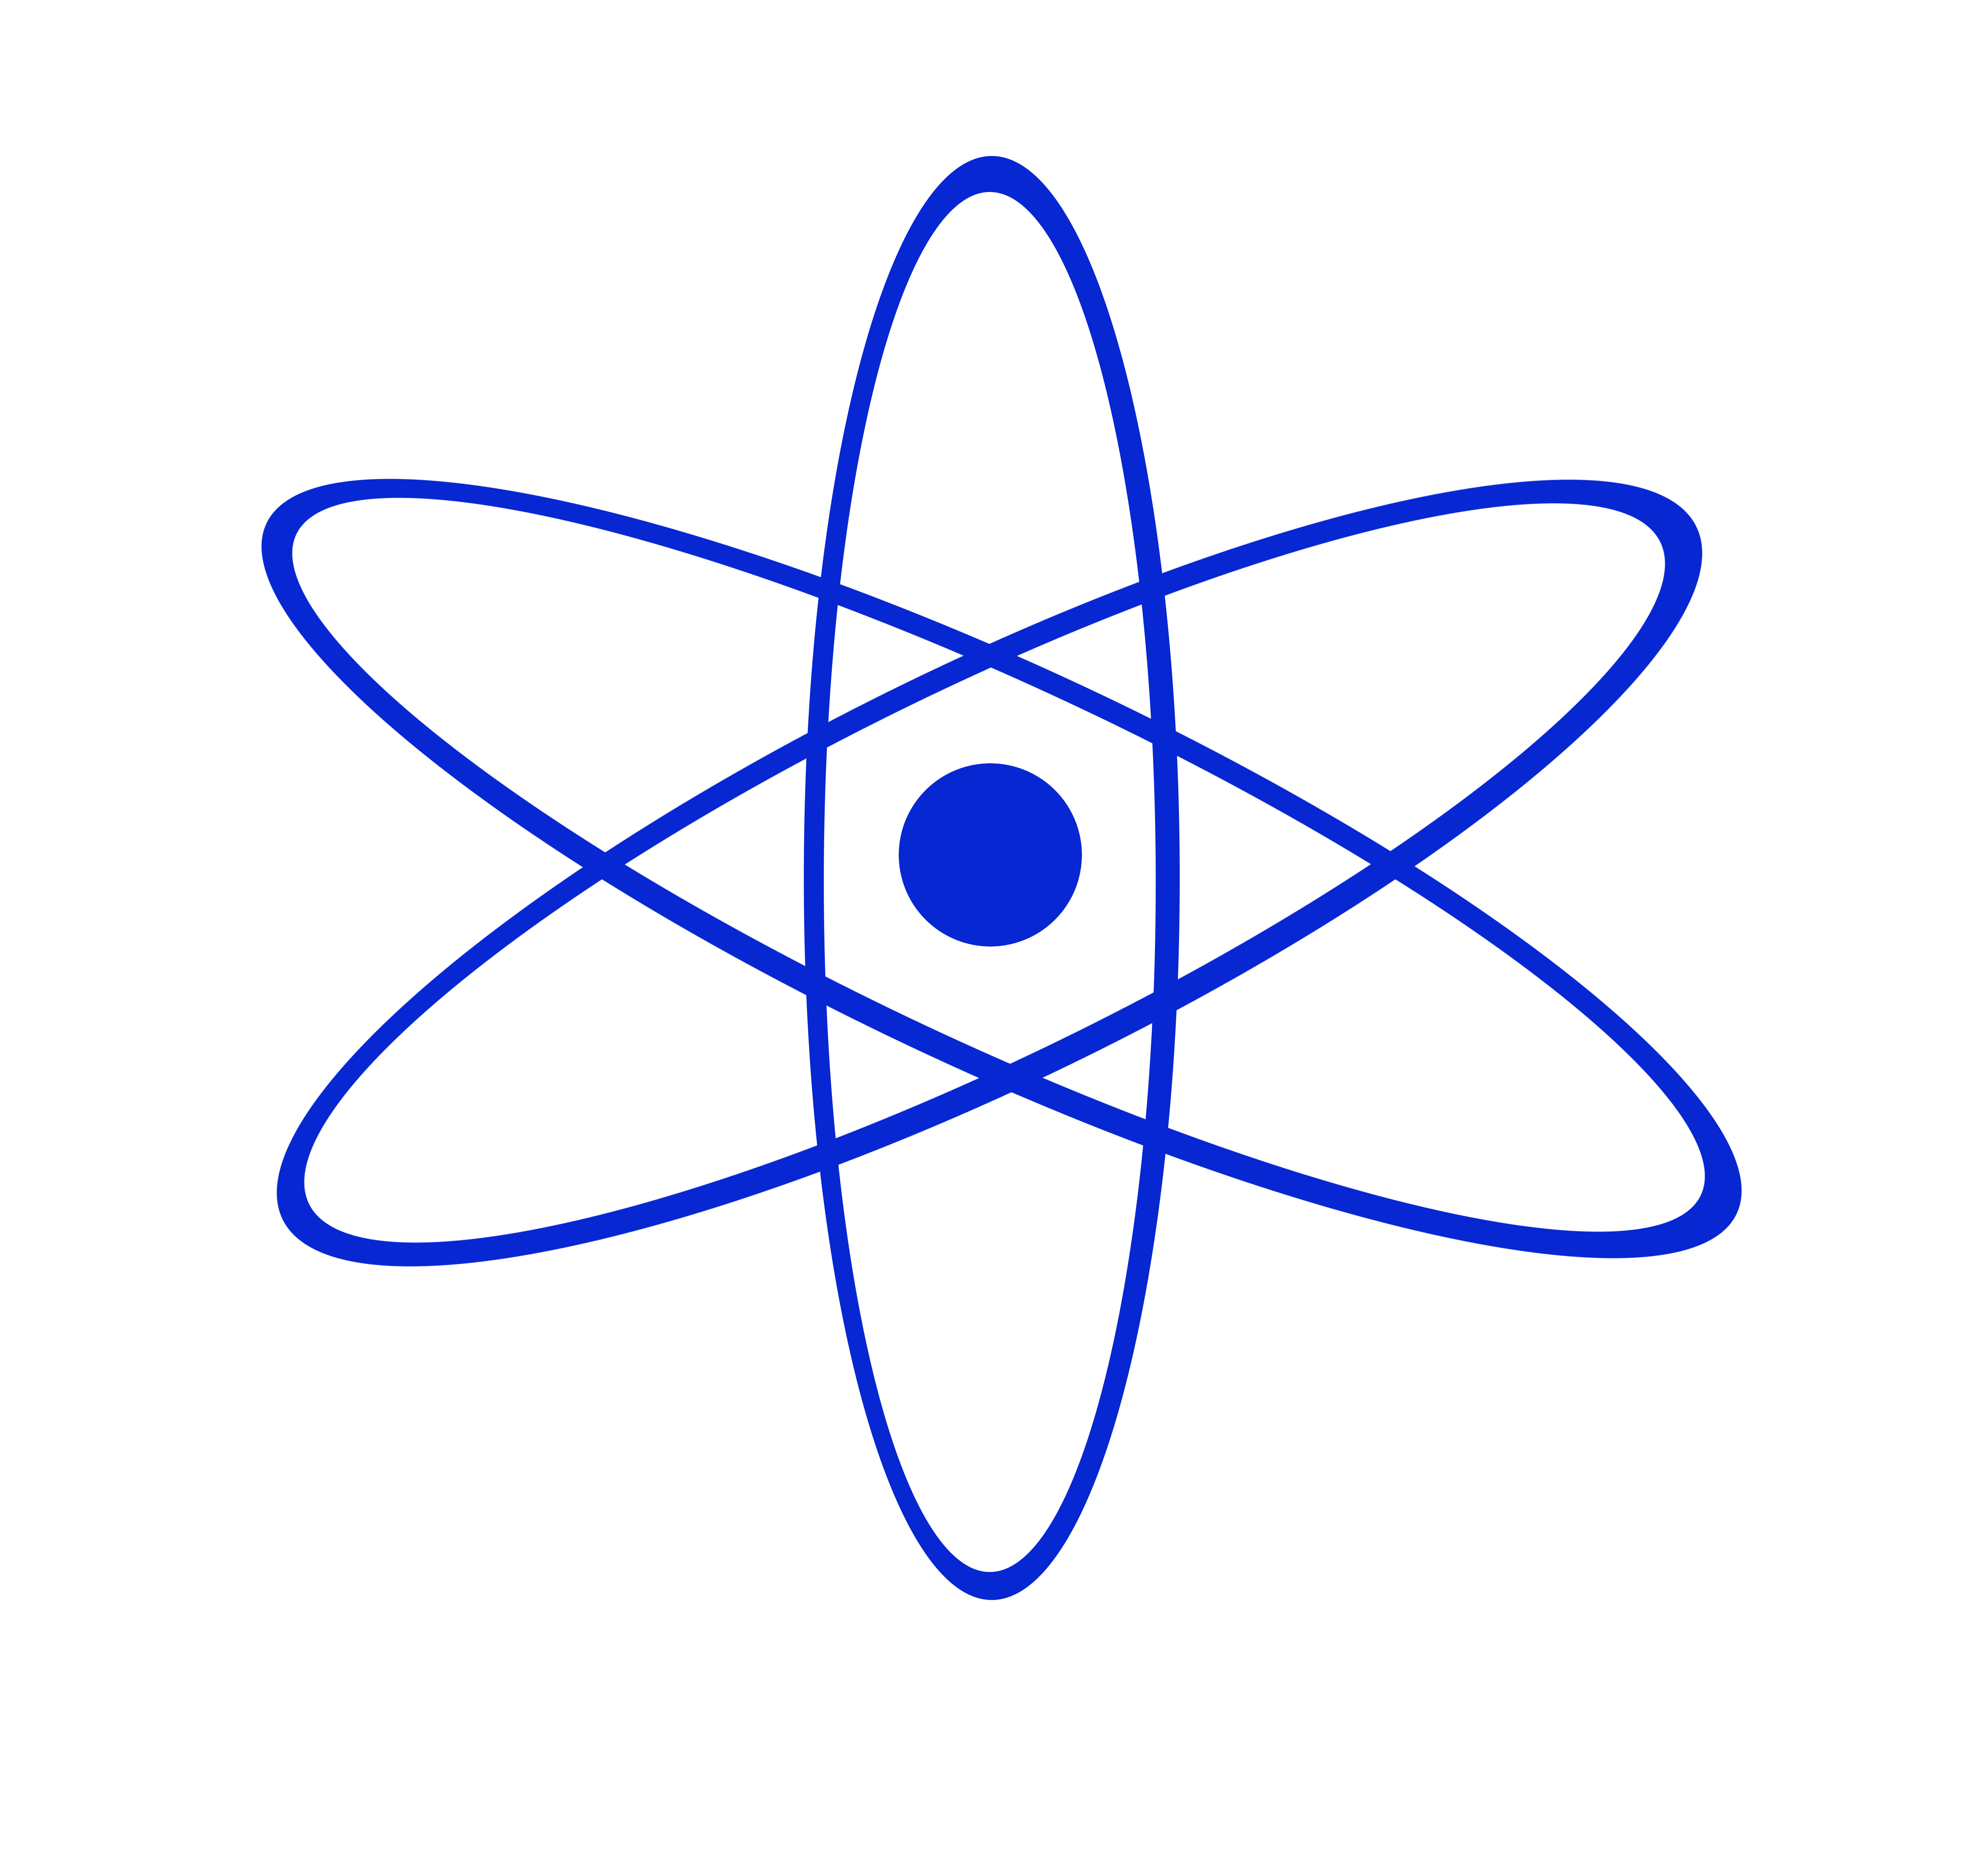 Physics Logos